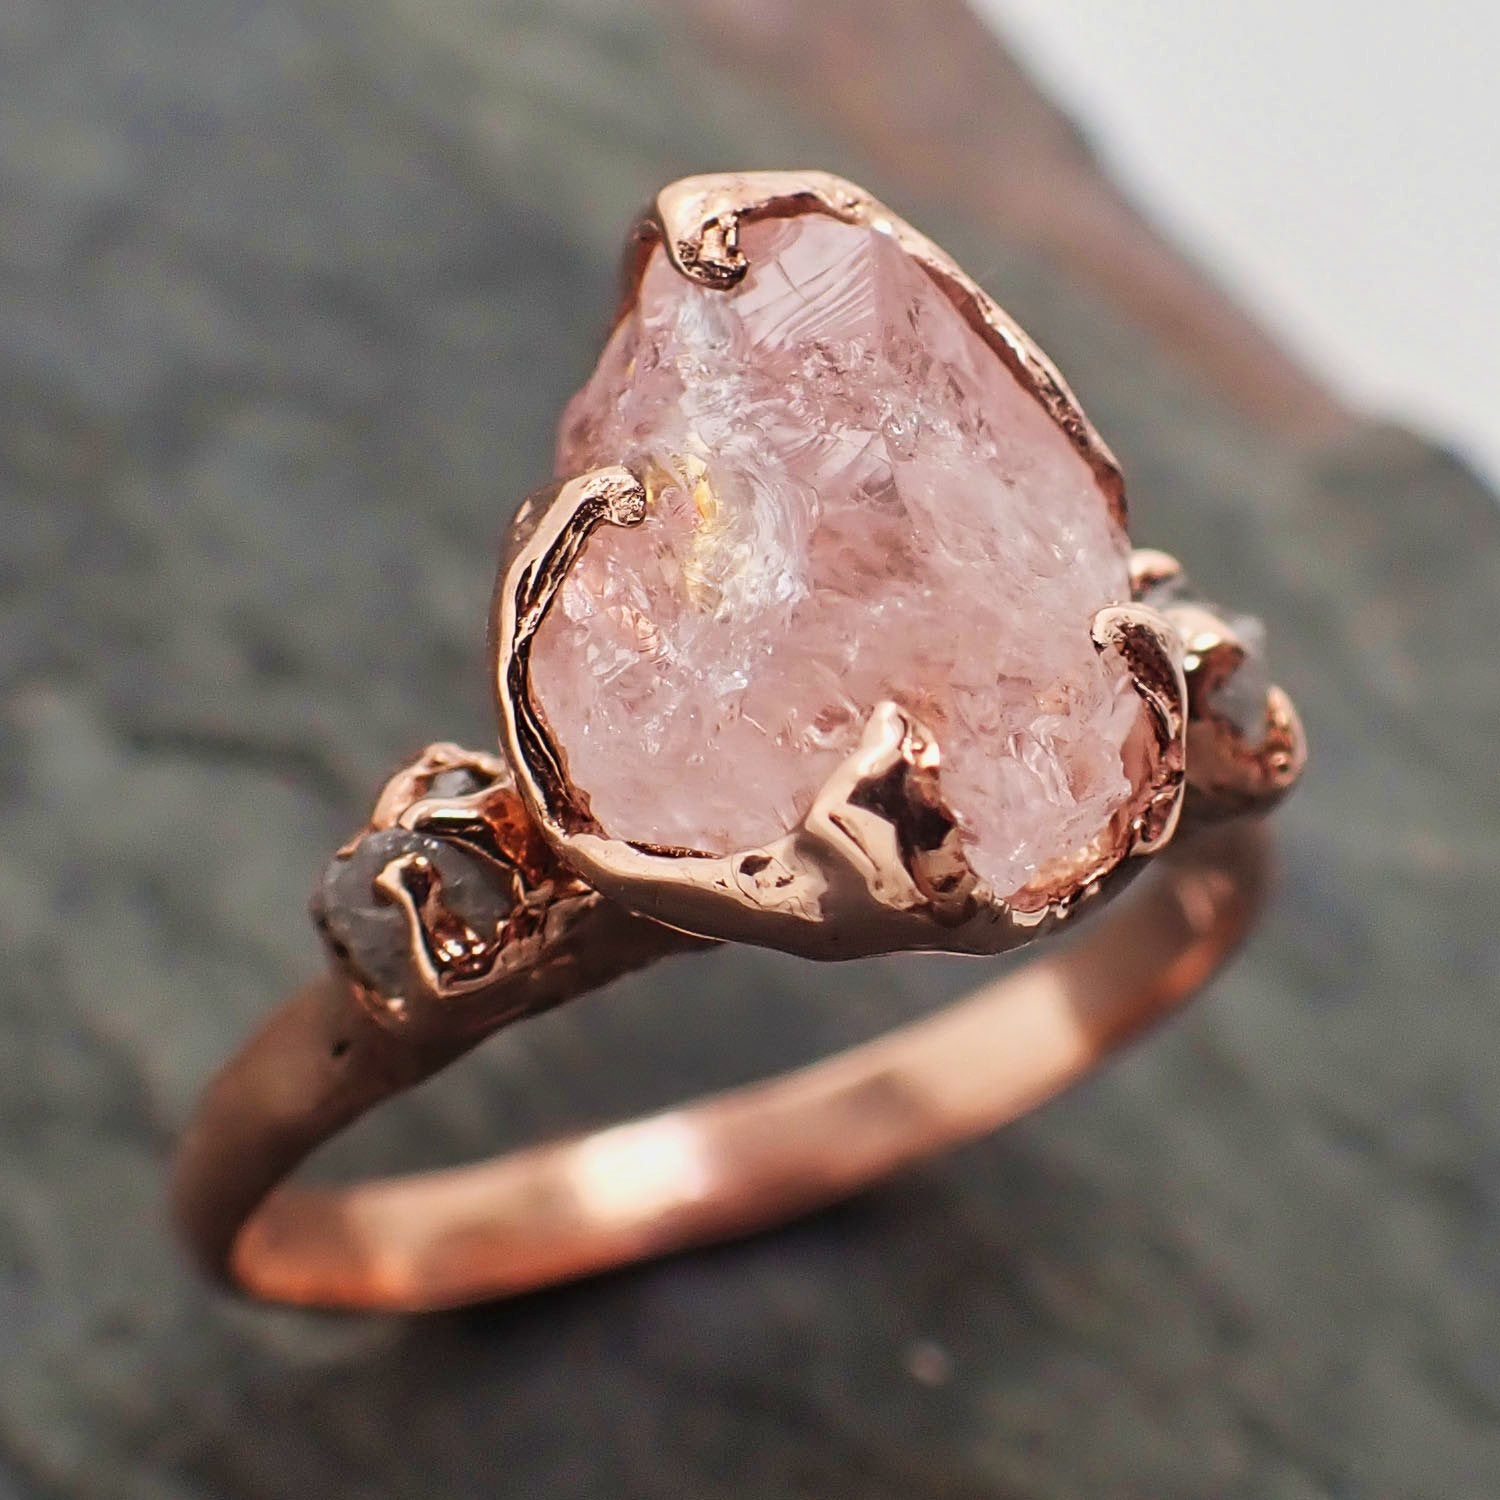 raw morganite diamond rose gold engagement ring multi stone wedding ring custom gemstone ring bespoke 14k pink conflict free by angeline 2310 Alternative Engagement